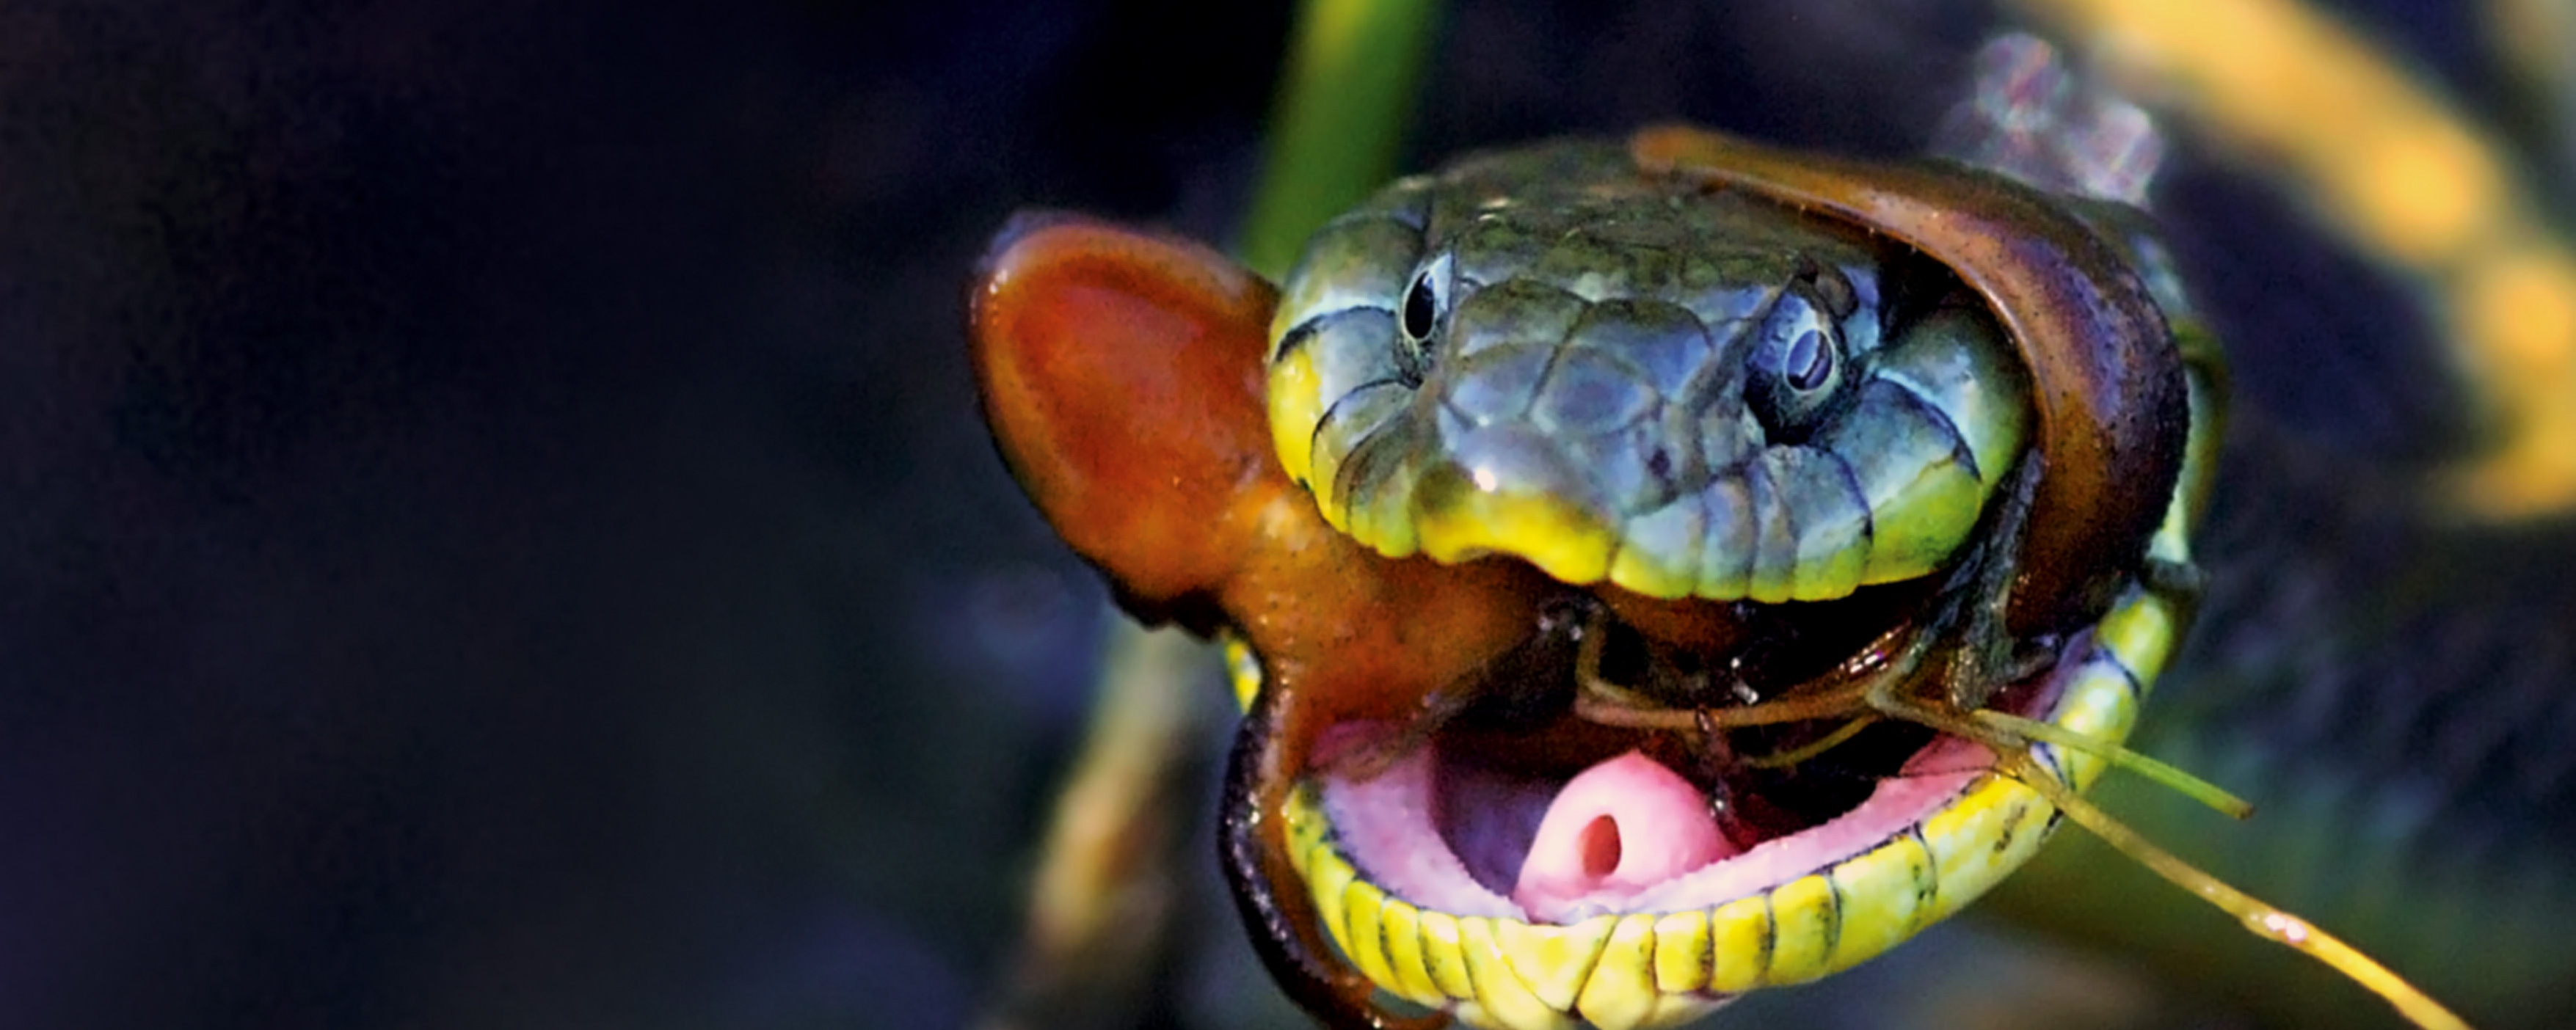 up close of a snake newt